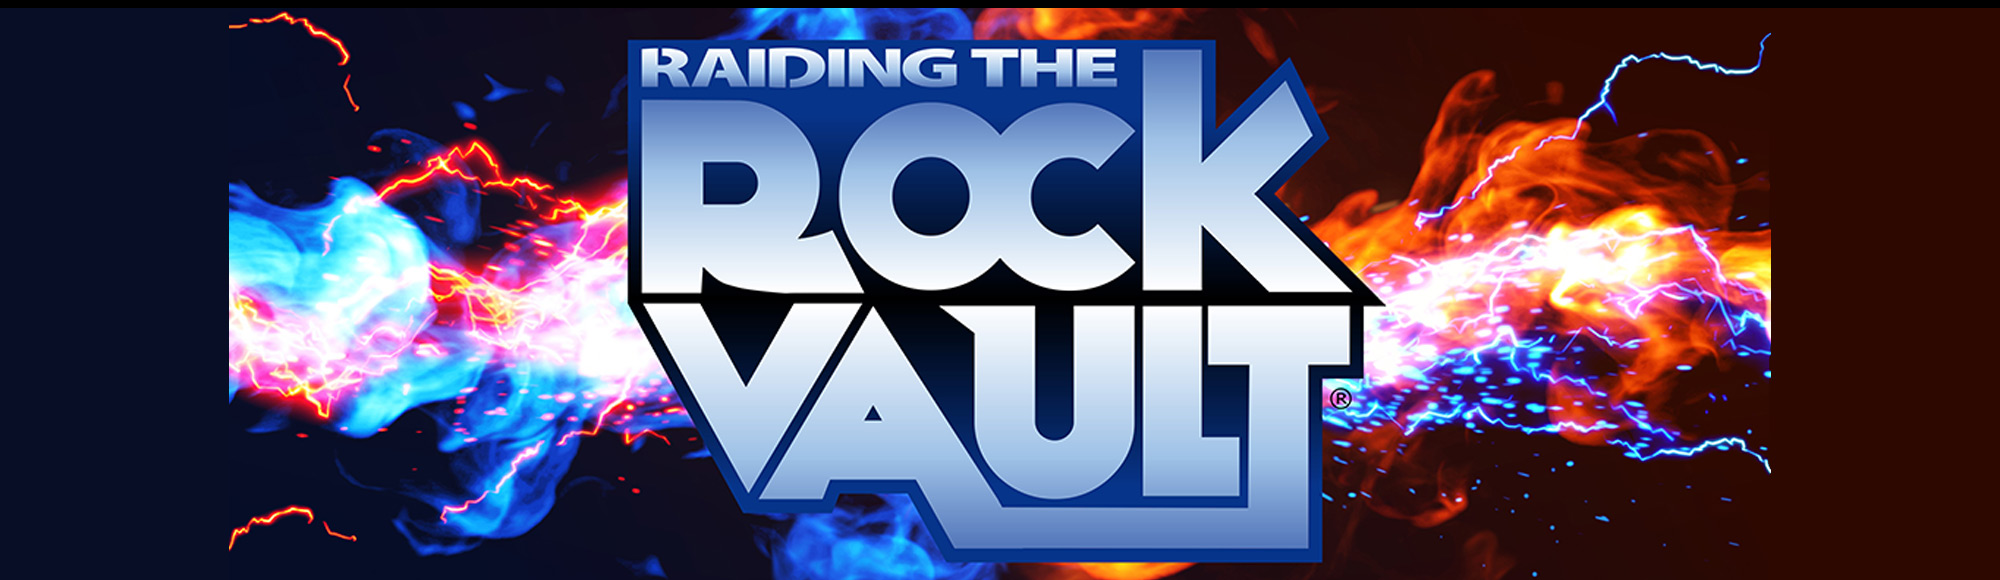 Raiding the Rock Vault show